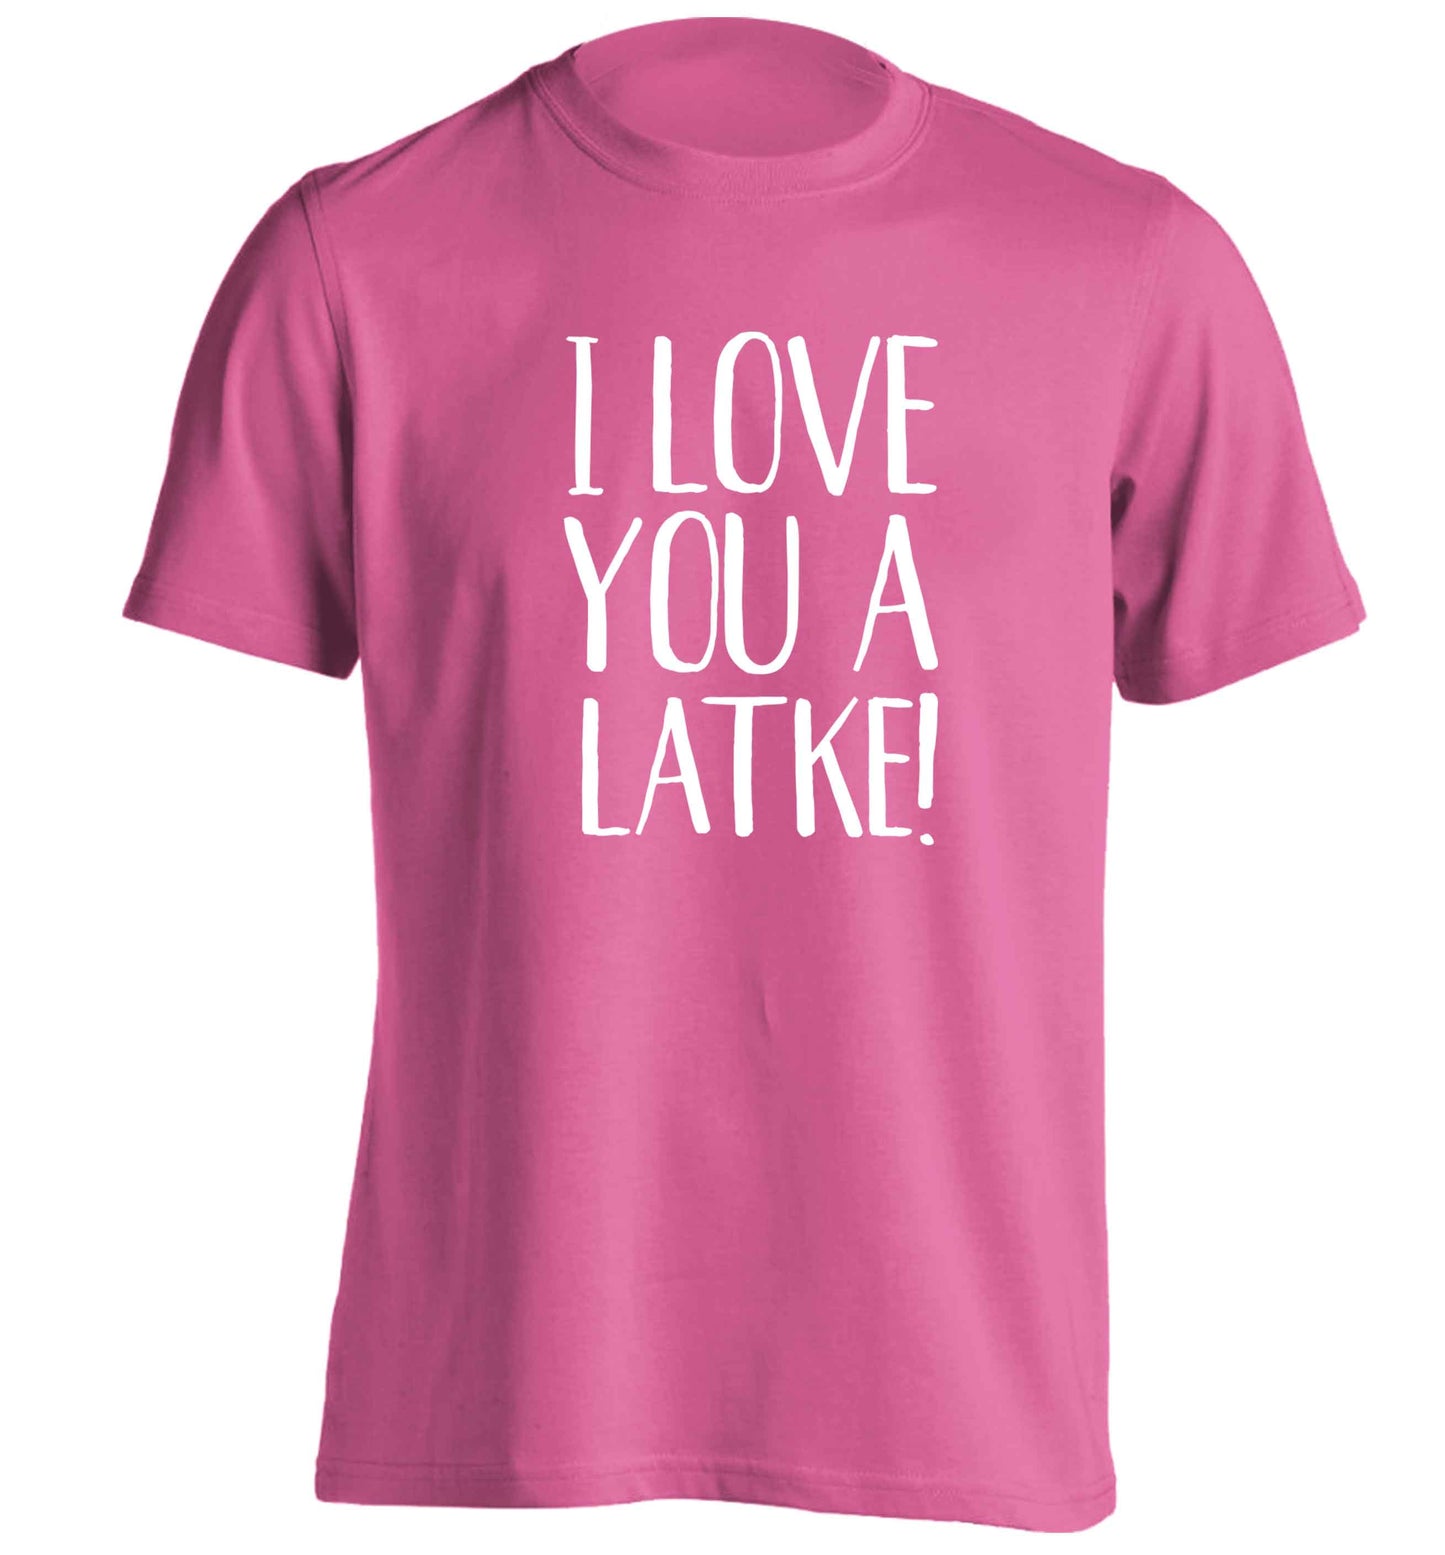 I love you a latke! adults unisex pink Tshirt 2XL